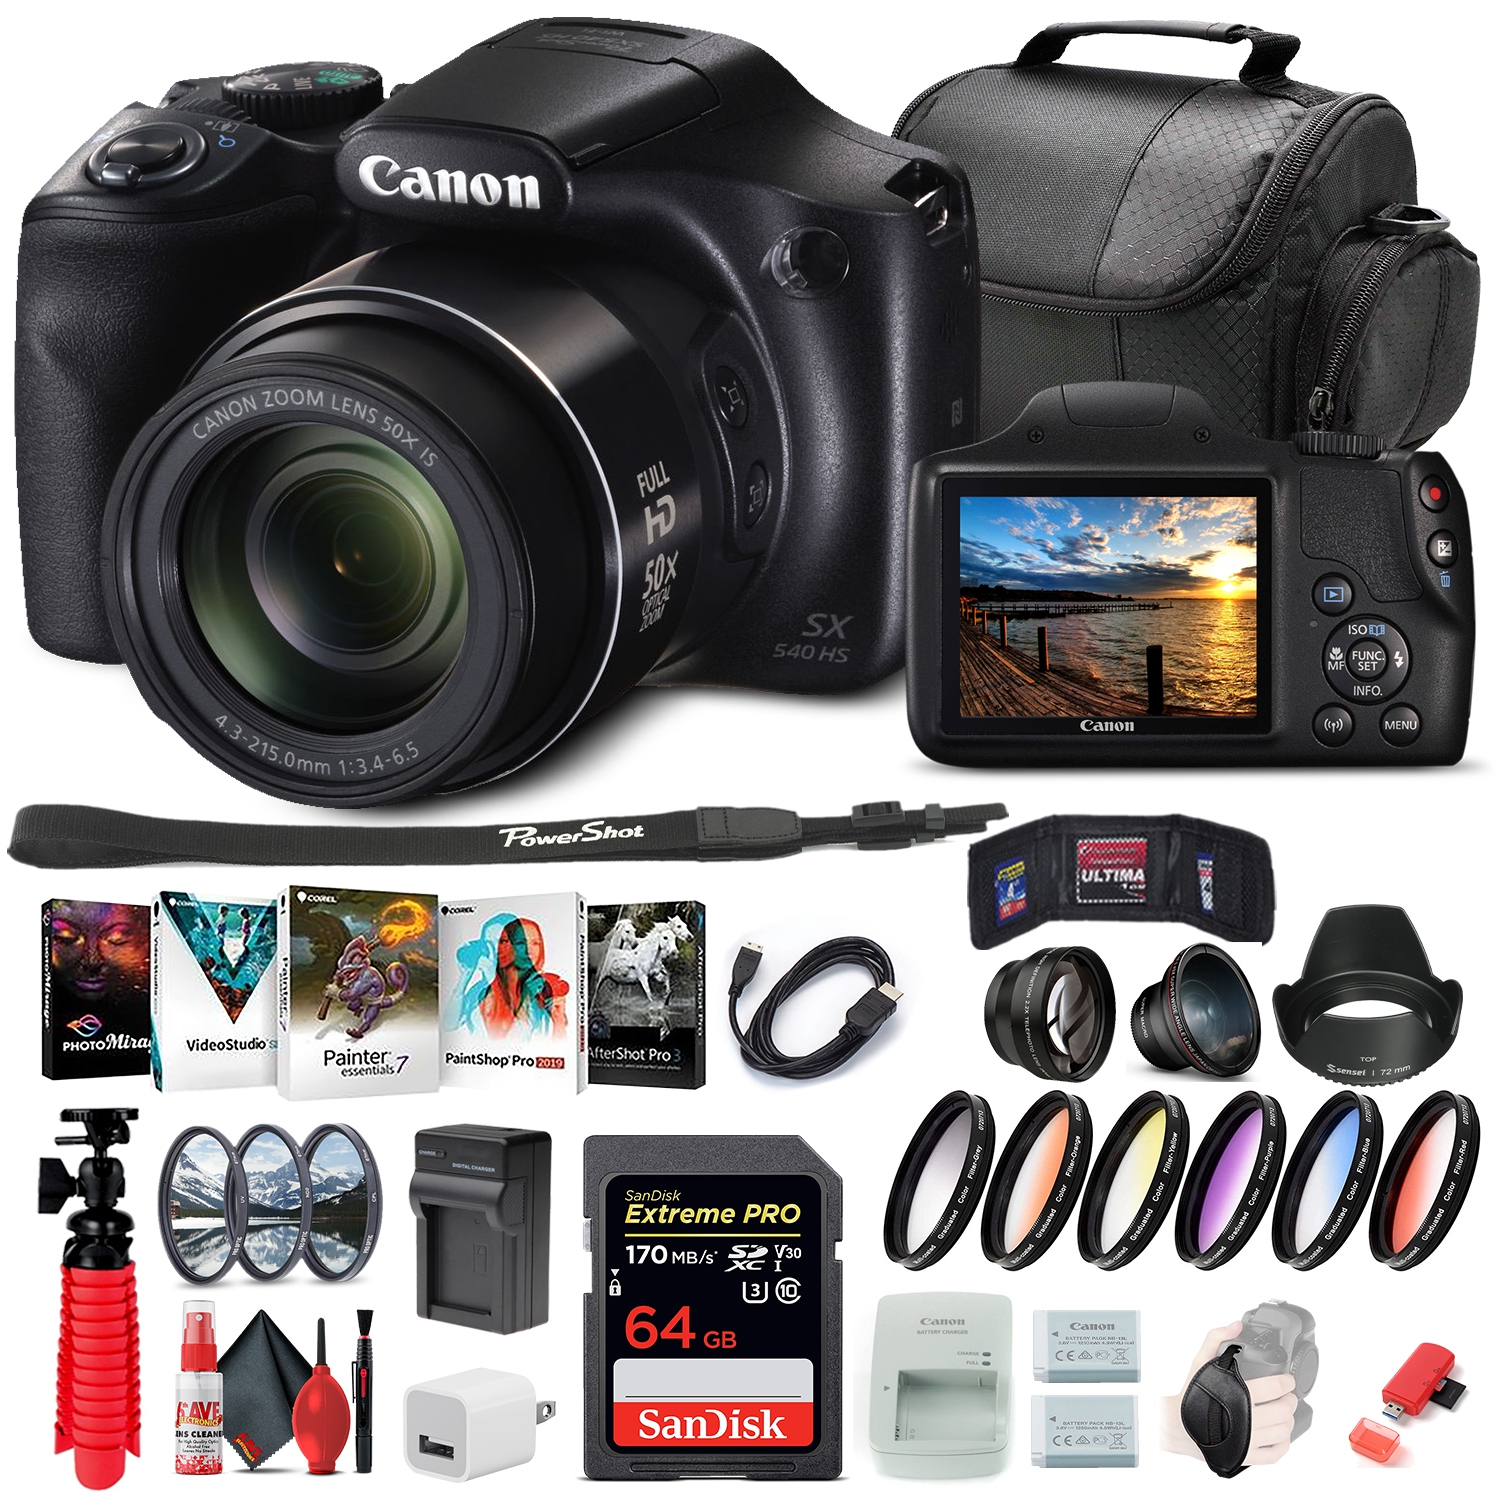 Canon PowerShot SX540 HS Digital Camera (1067C001) + 64GB Memory Card + More